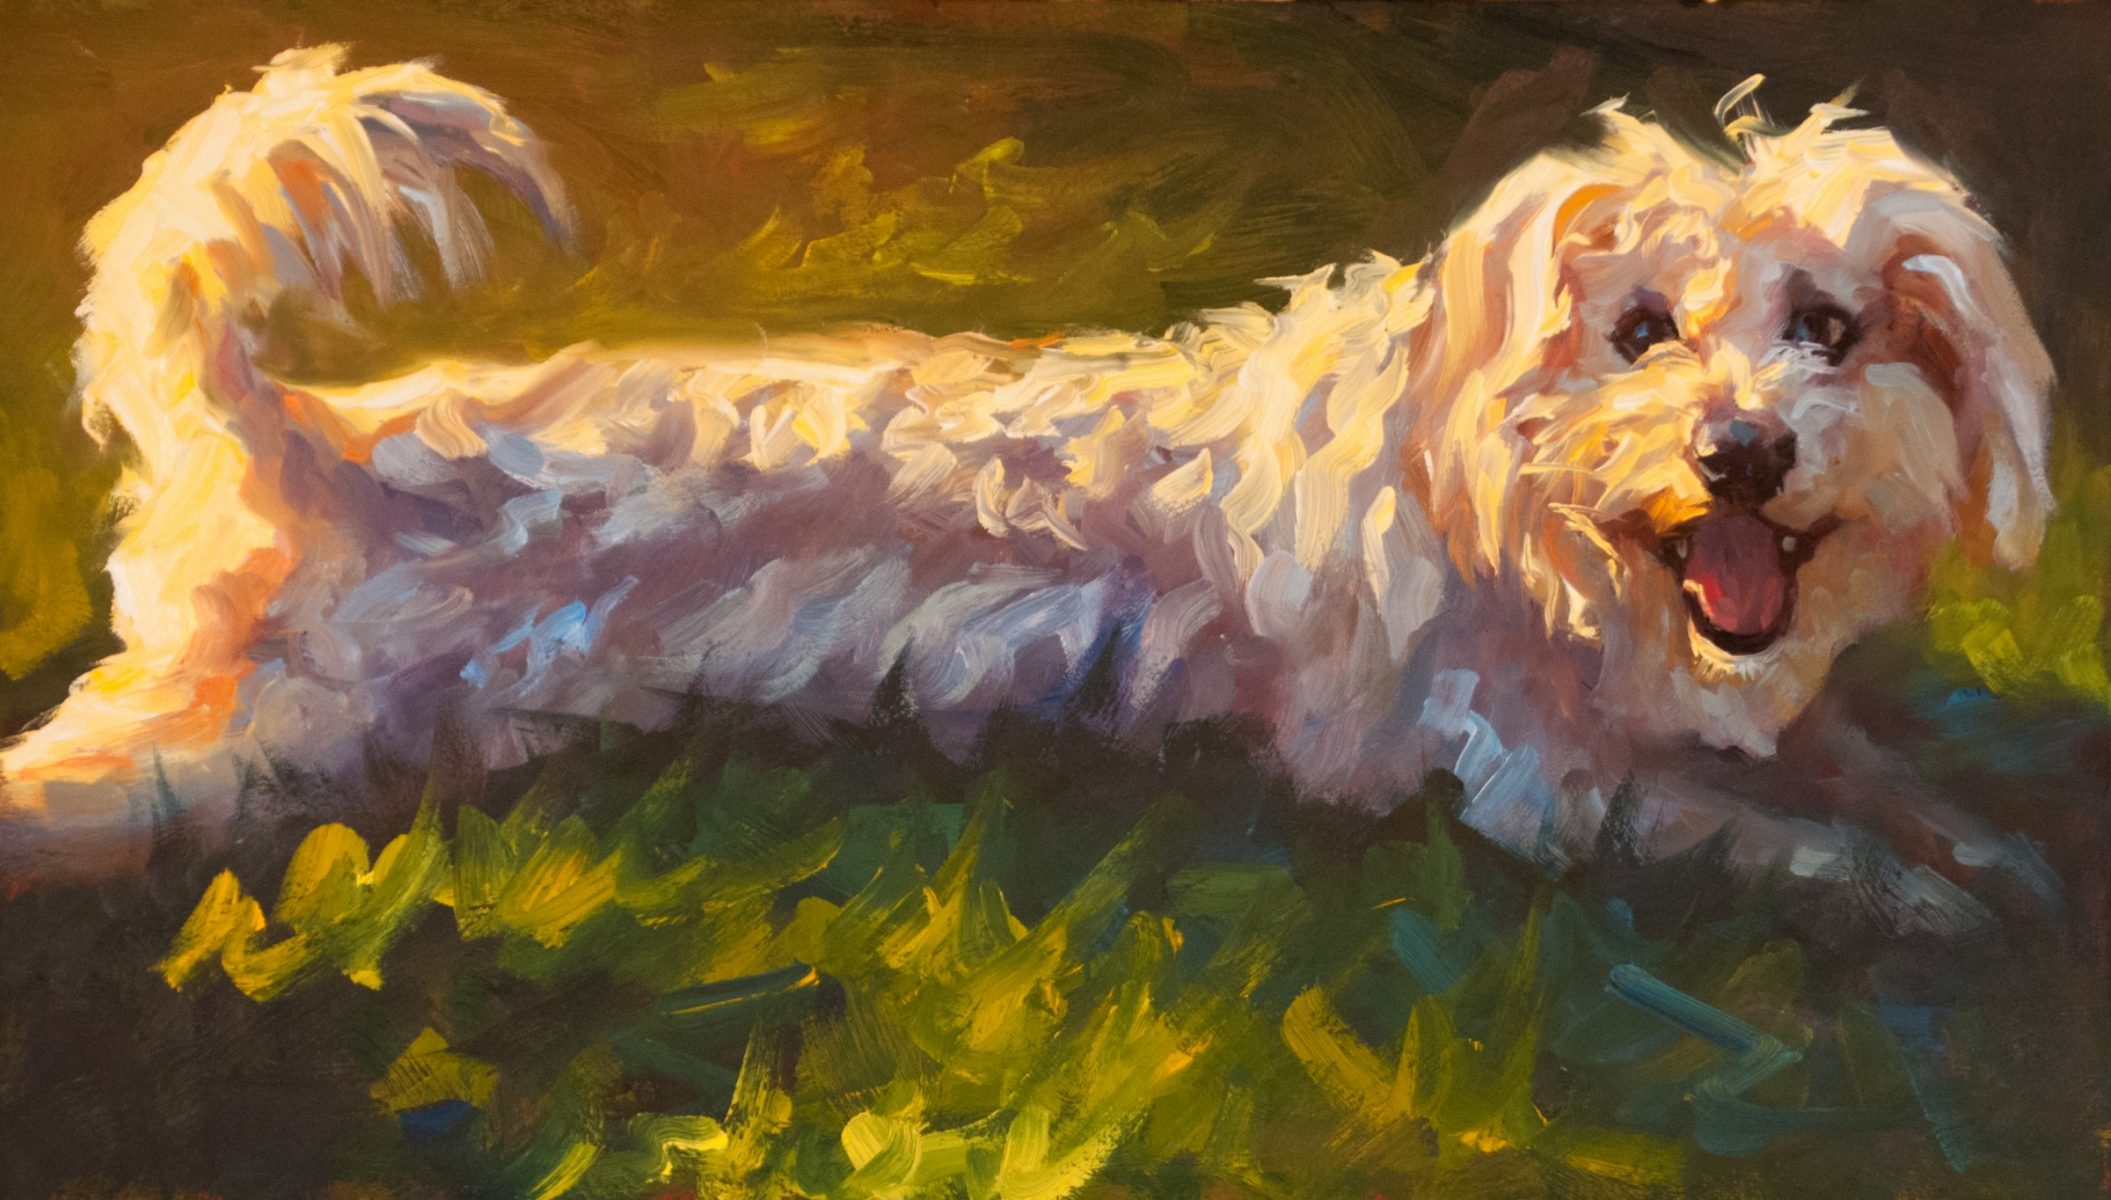 Lucky painting of a dog by artist Cheri Christensen